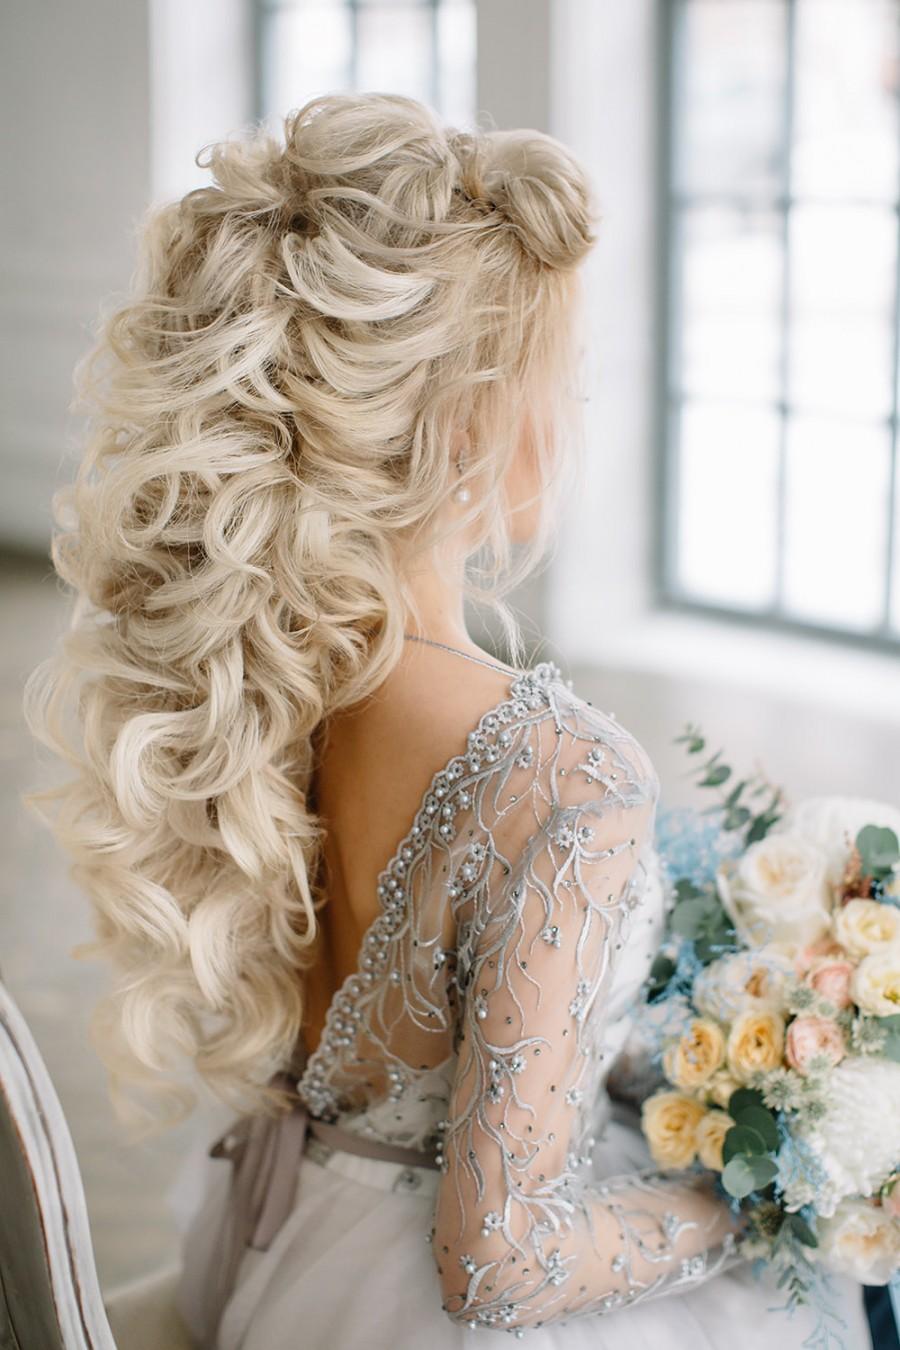 زفاف - Vera / Wedding dress with sleeves / Low back / Boneless / Light / Embroidered and beaded lace